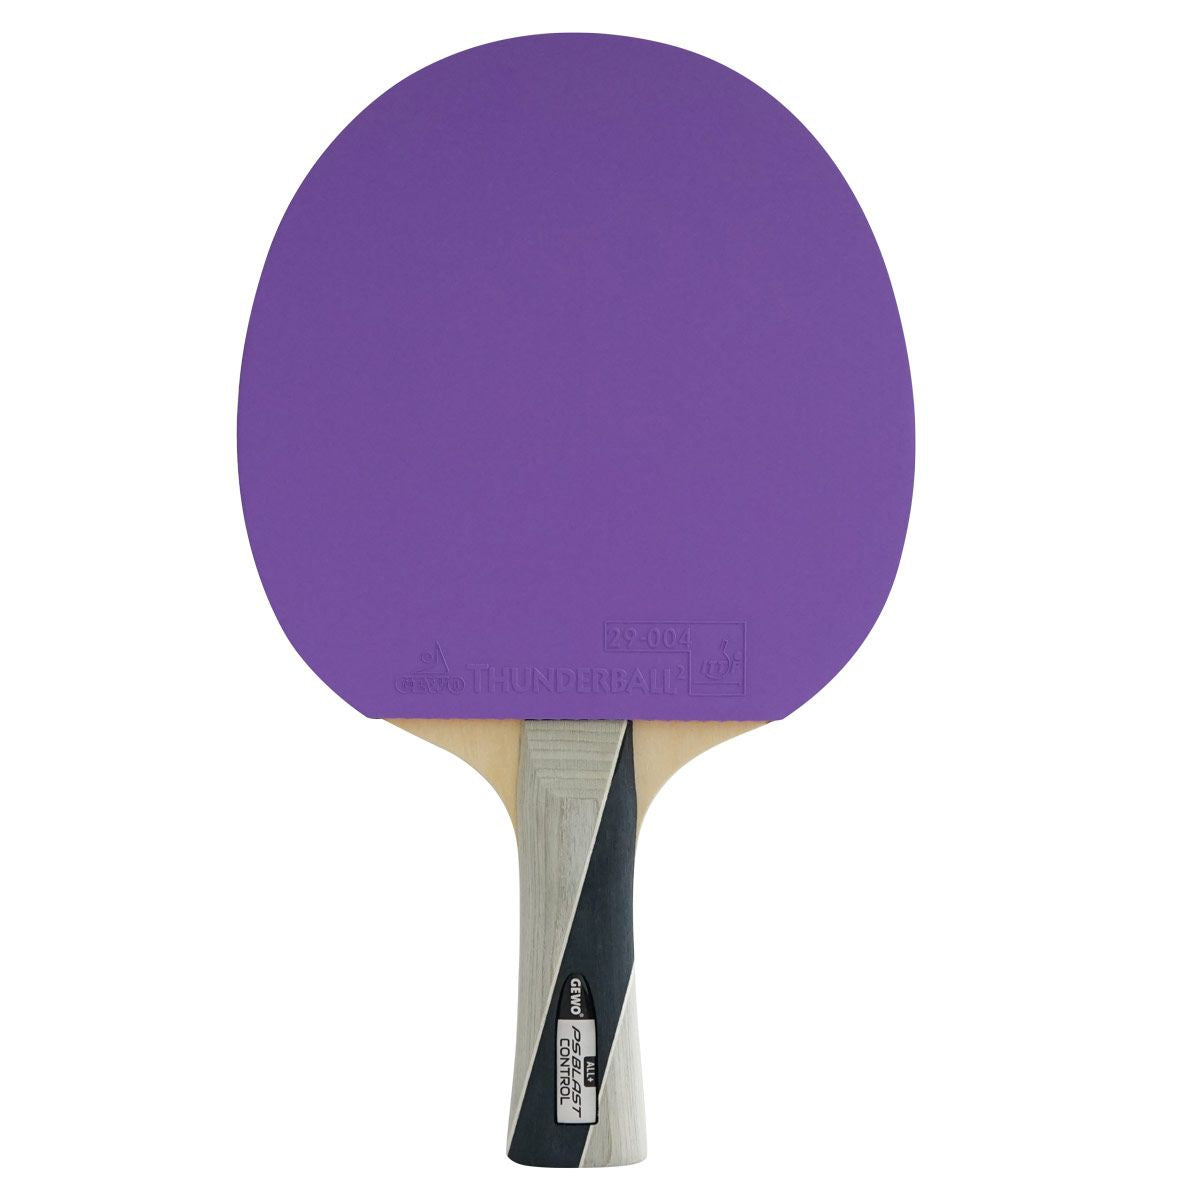 GEWO Bat PS Blast Control flared - Offensive Minus Table Tennis Racket 